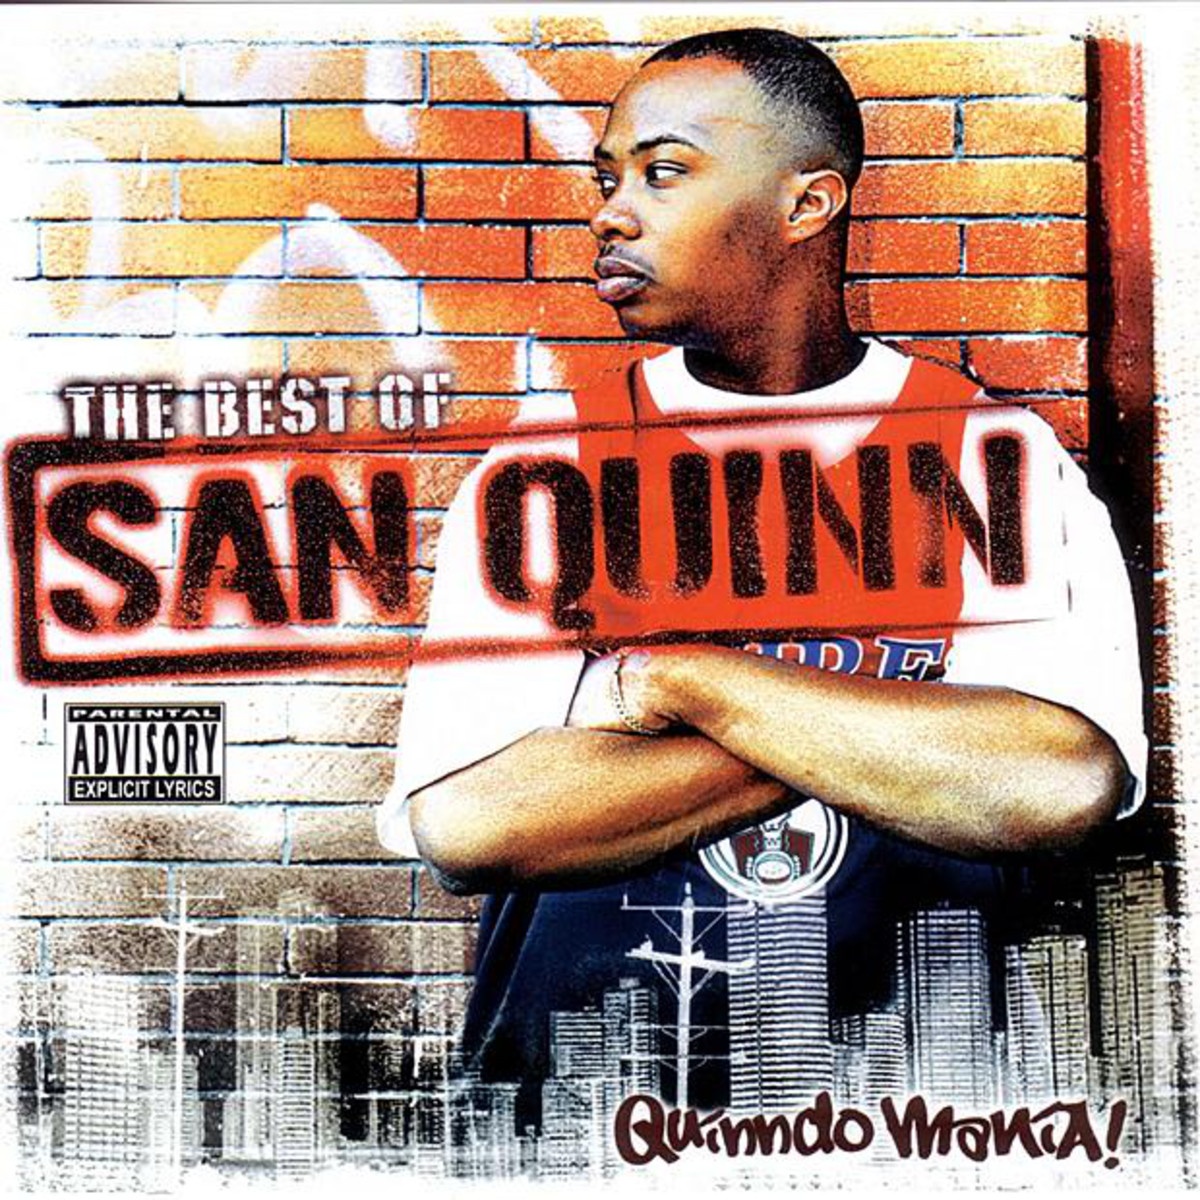 Quindo Mania: The Best Of San Quinn